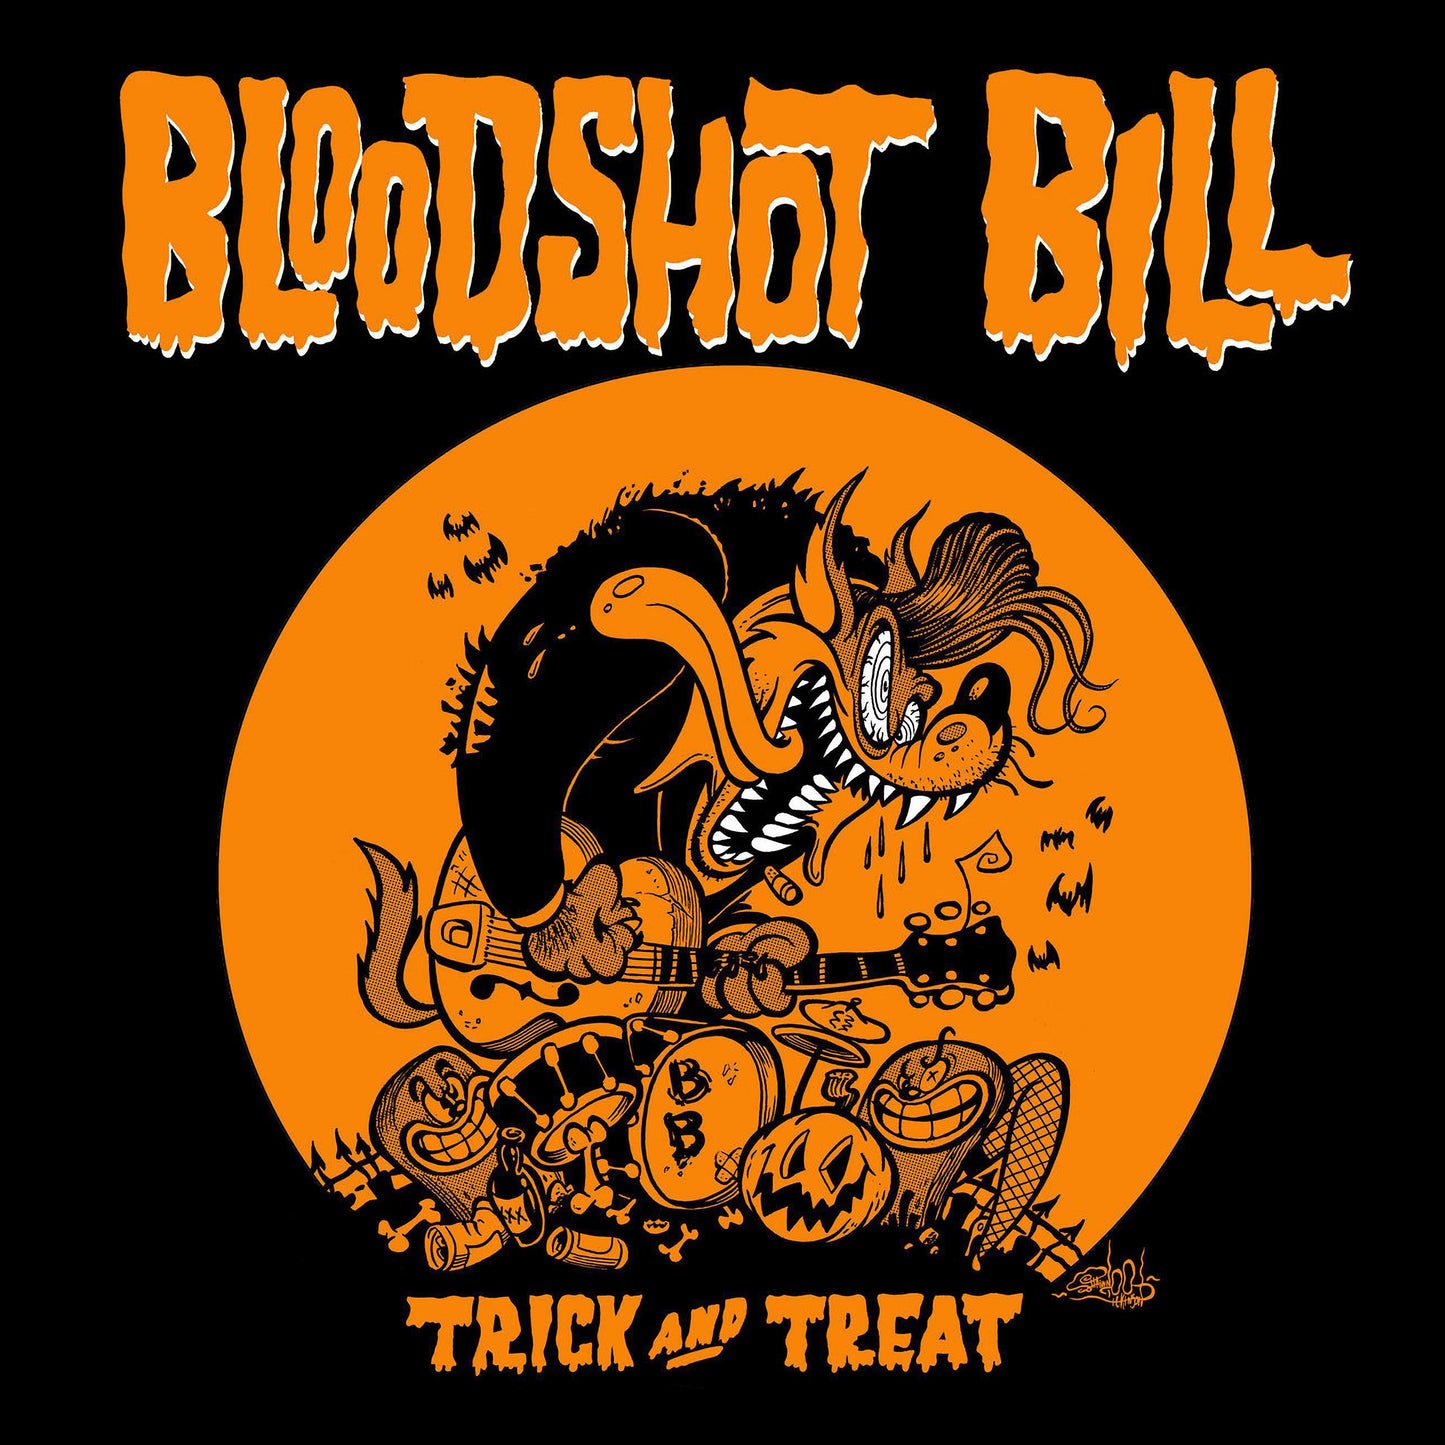 Bloodshot Bill “Trick and Treat” EP